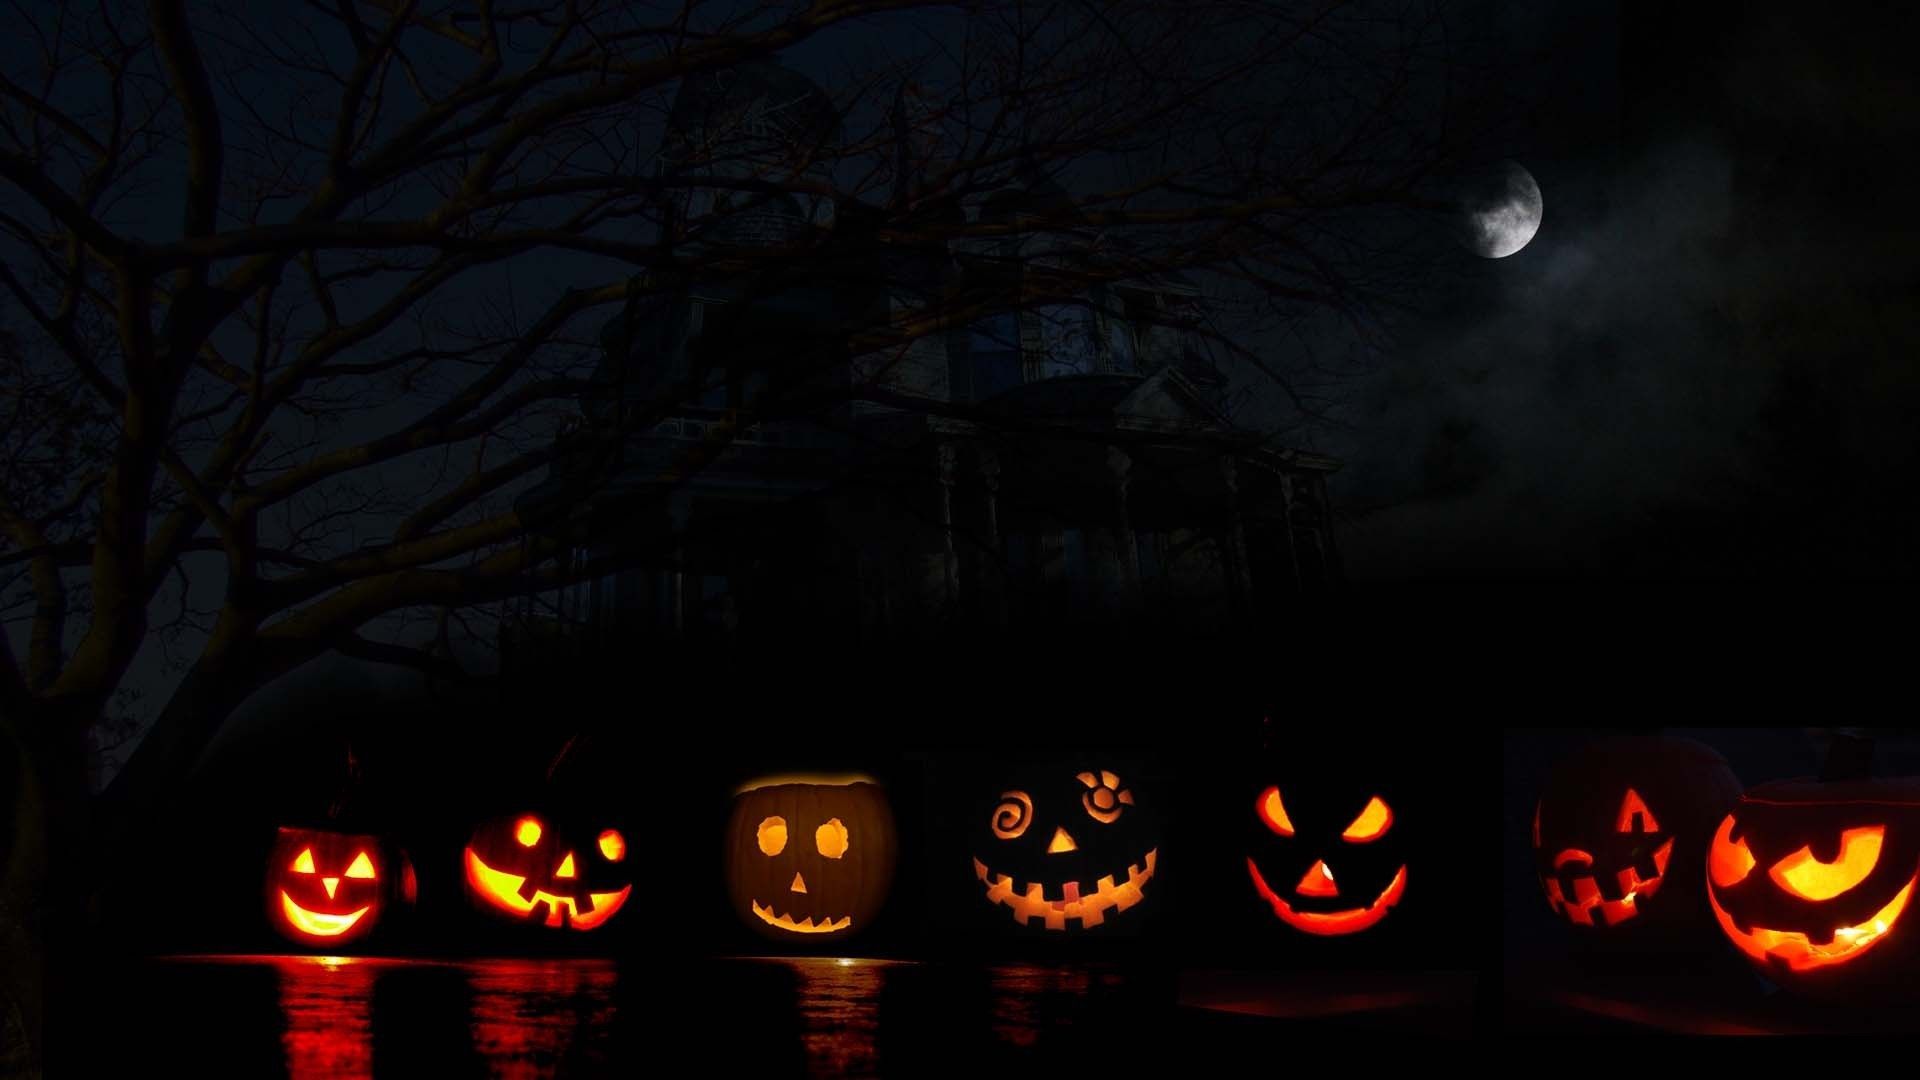 A group of jack o lanterns sitting on the ground - Halloween desktop, creepy